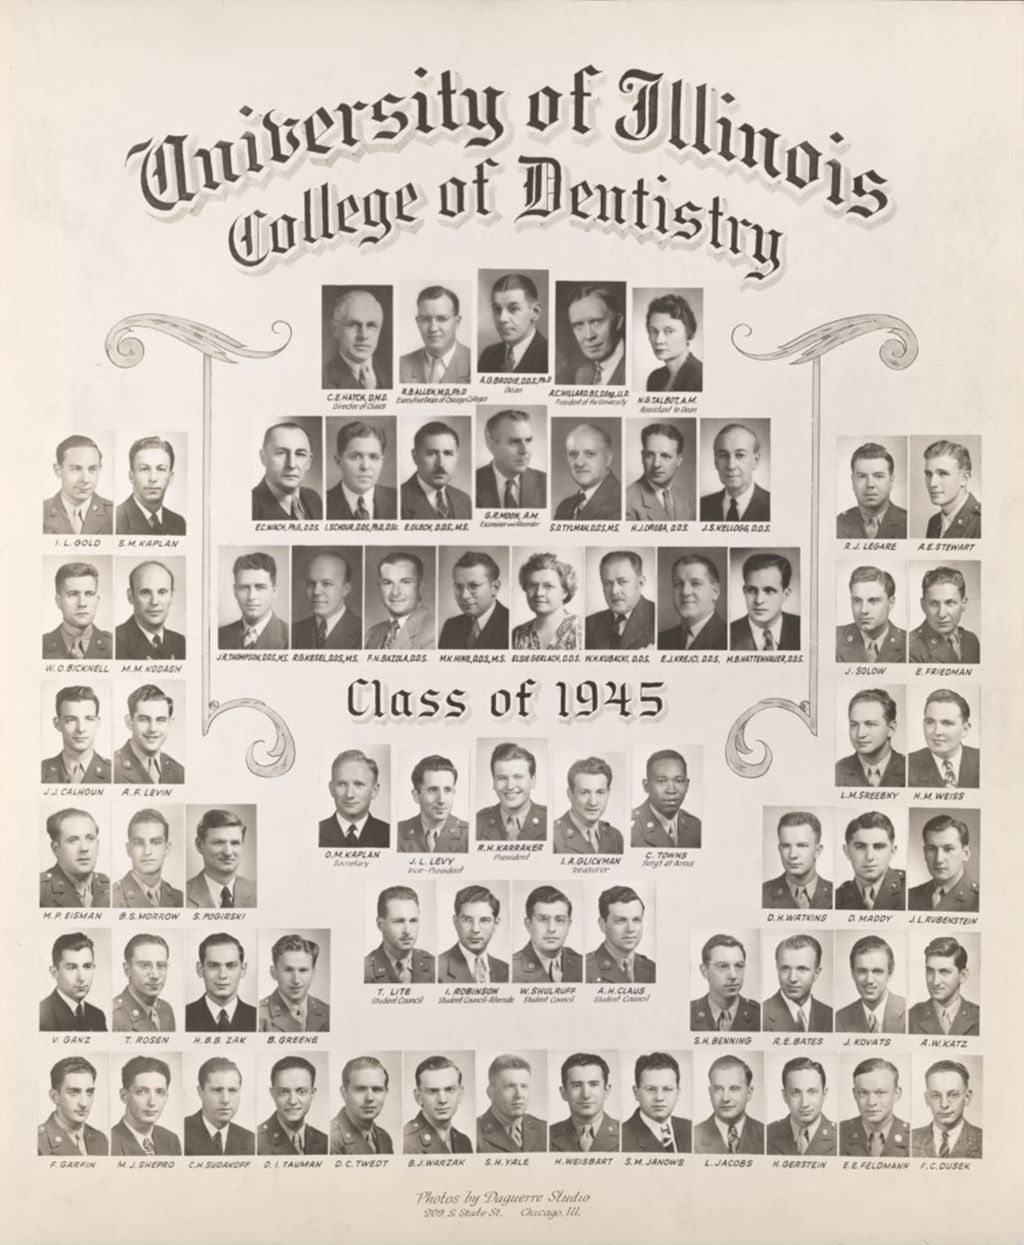 1945 graduating class, University of Illinois College of Dentistry